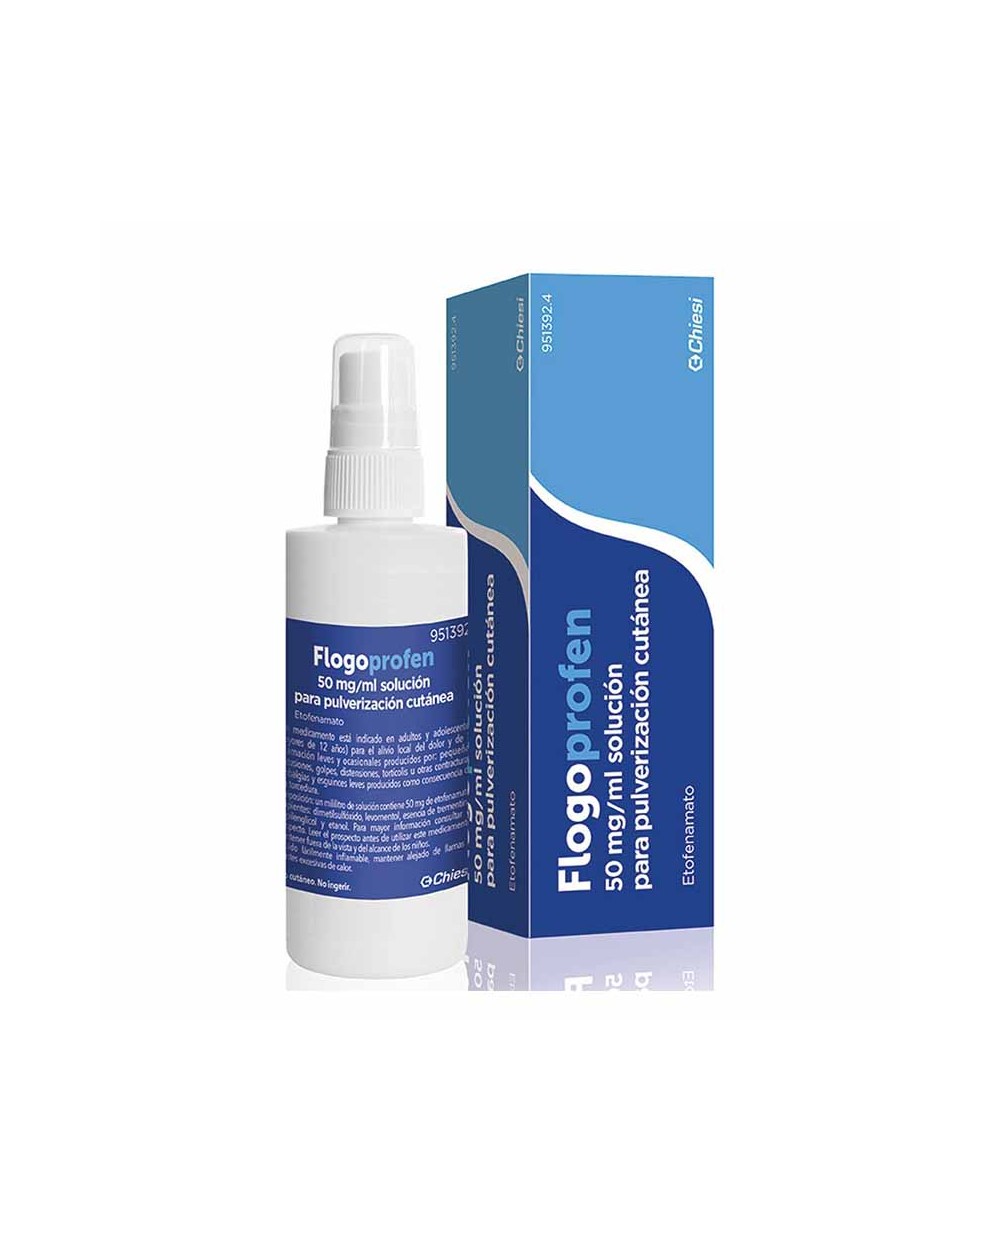 Flogoprofen Spray 100 ml. Antiinflamatorio de pulverización cutánea